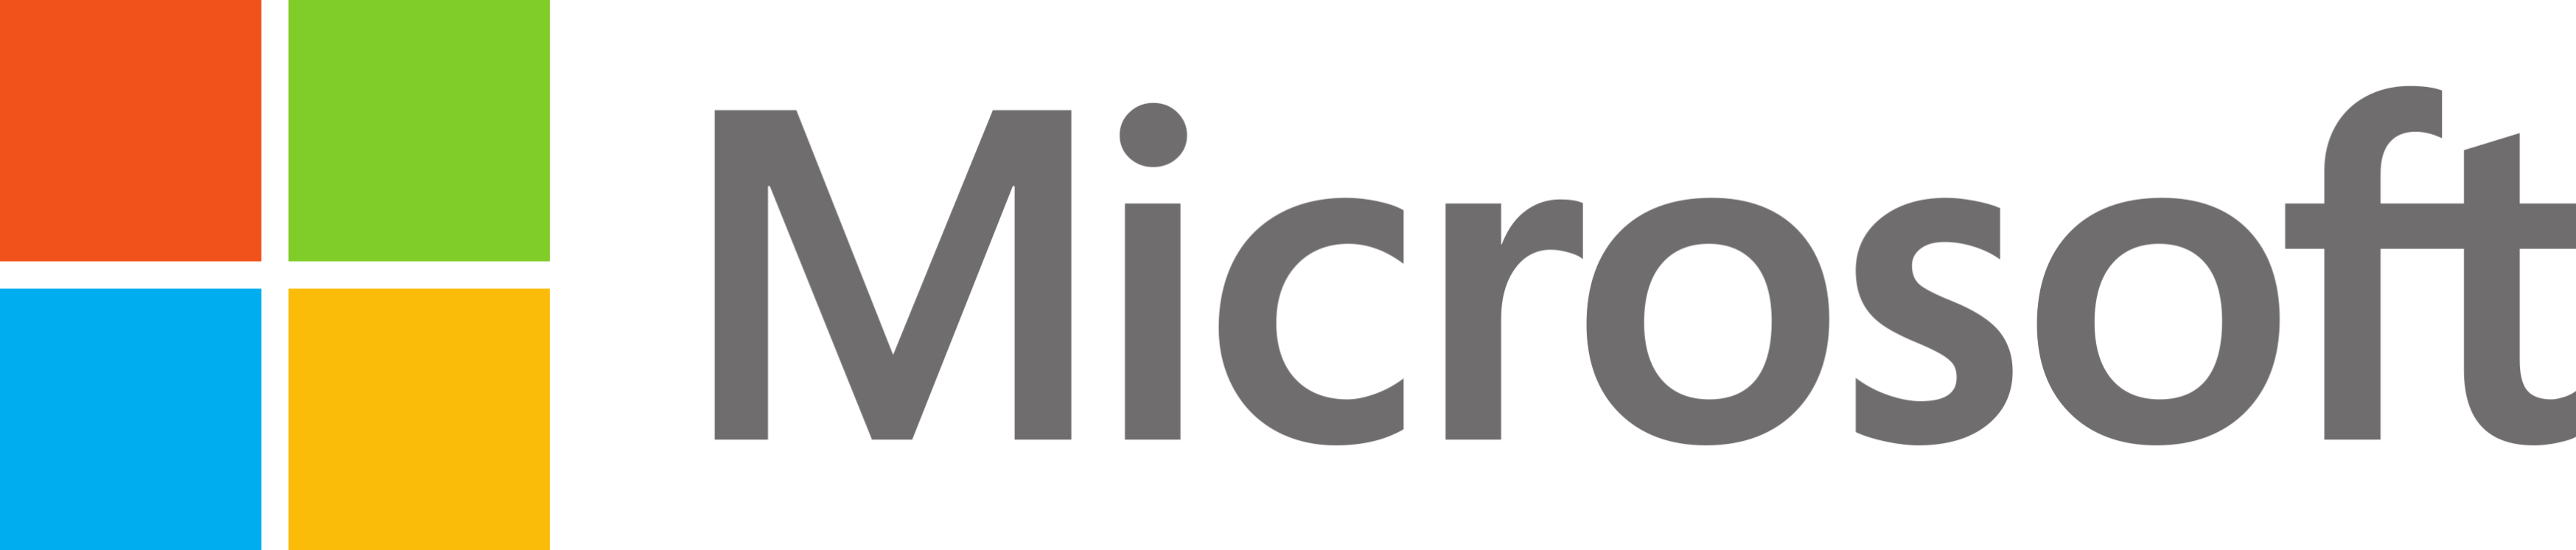 Logo microsoft png